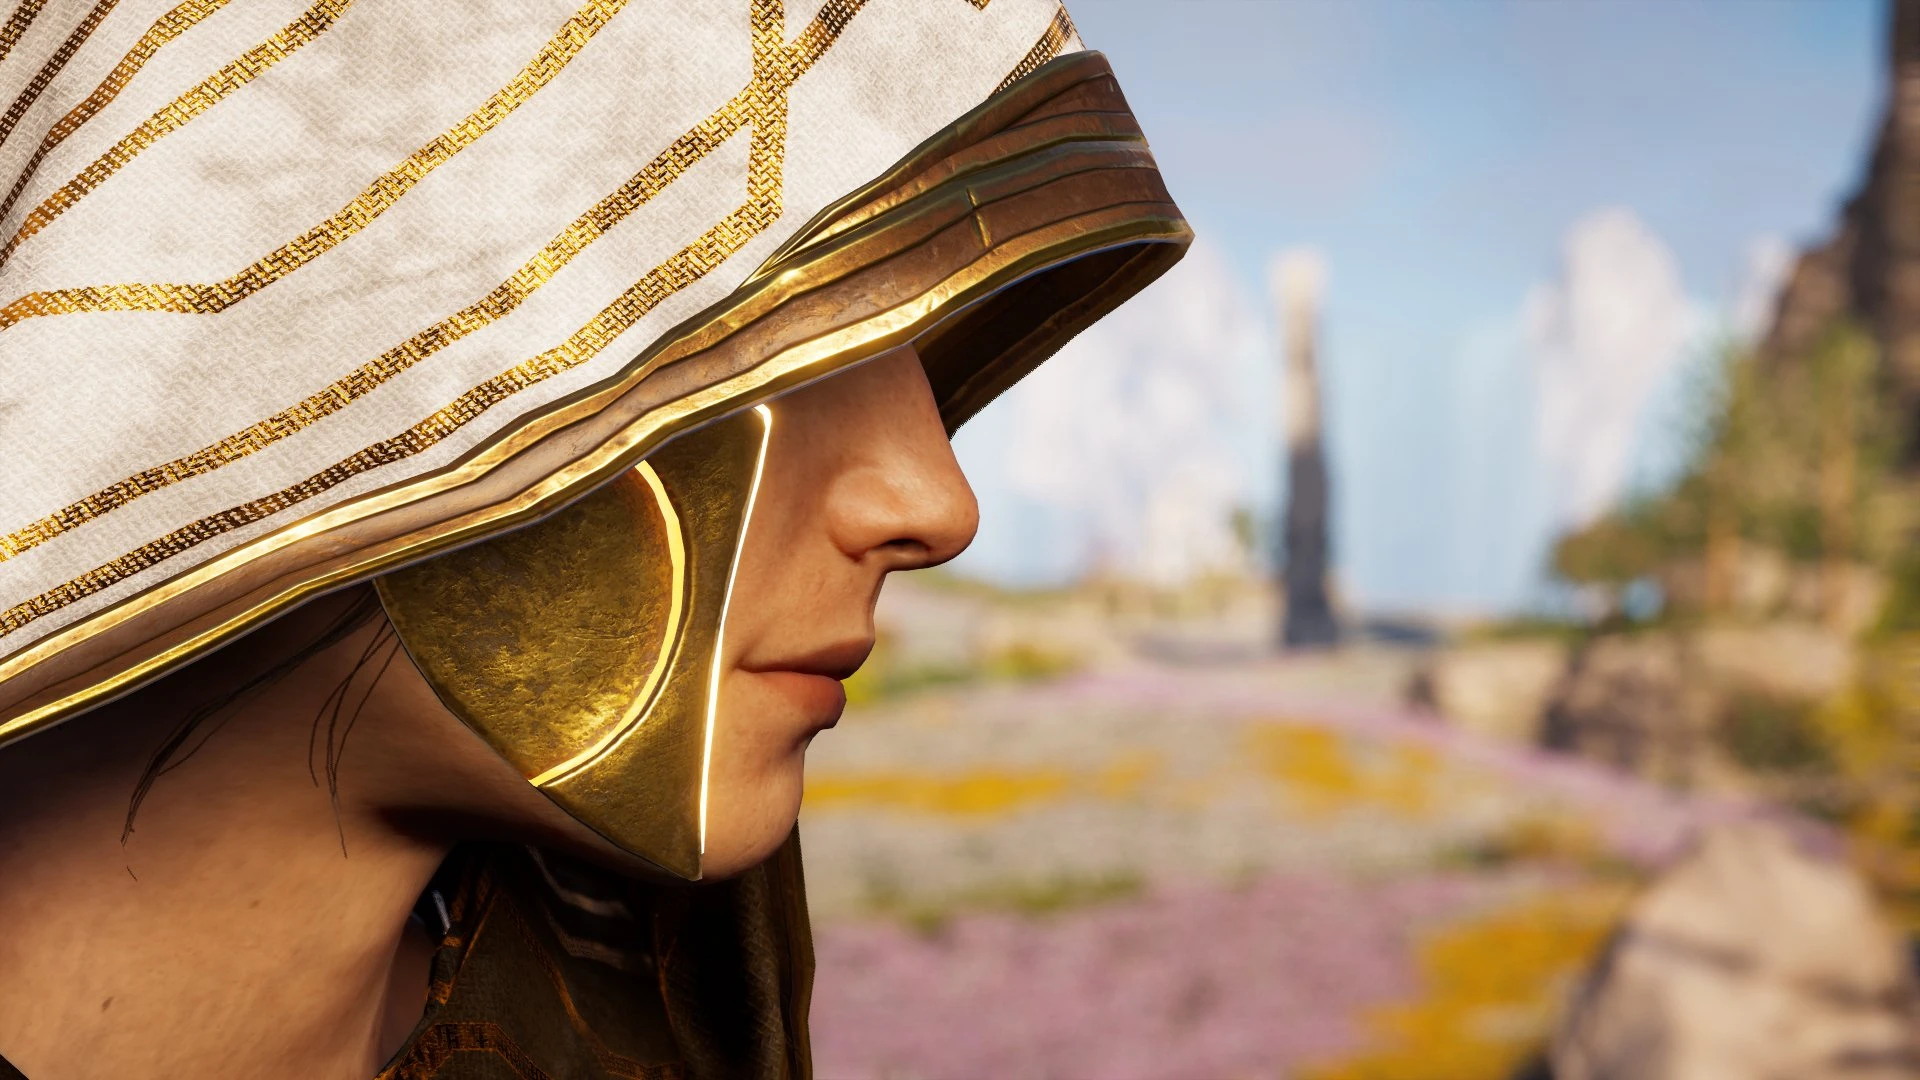 Kassandra at Assassins Creed Odyssey Nexus - Mods and 